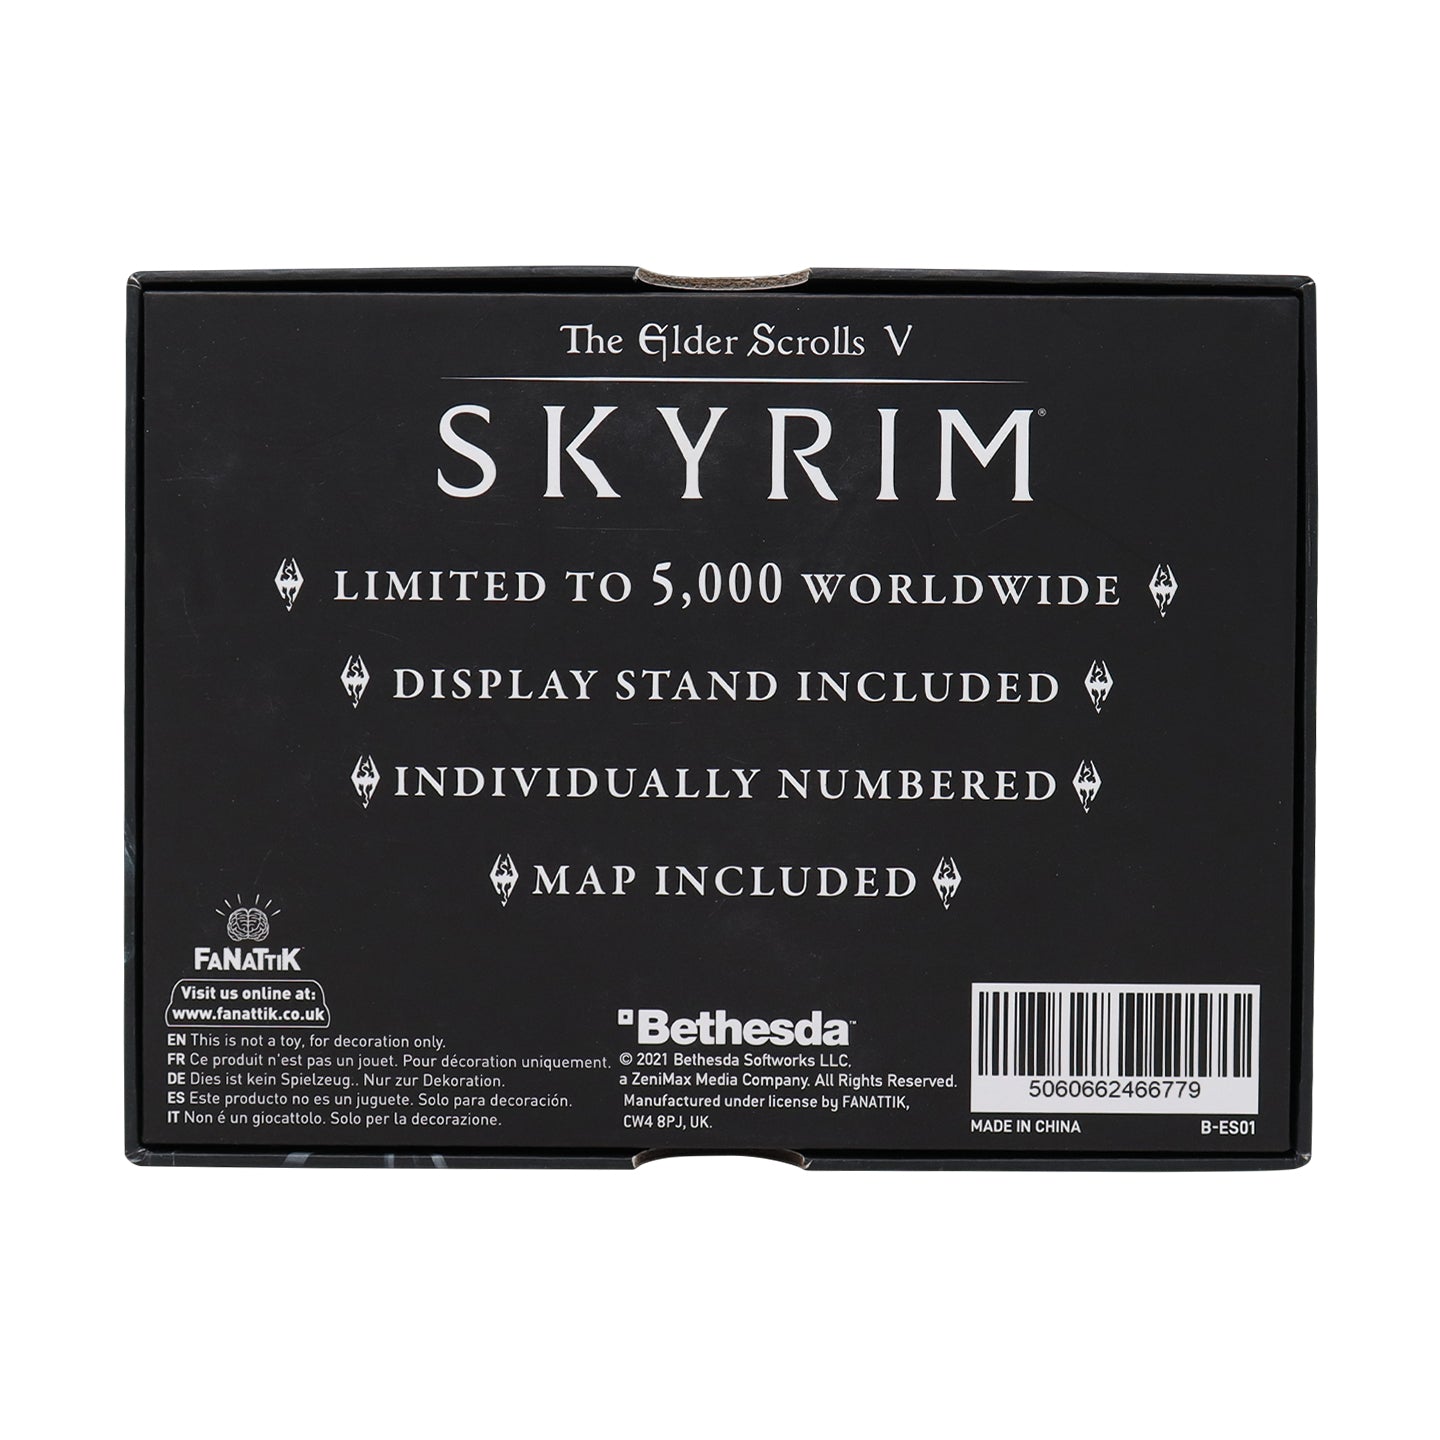 The Elder Scrolls V: Skyrim Limited Edition Replica Dragonstone